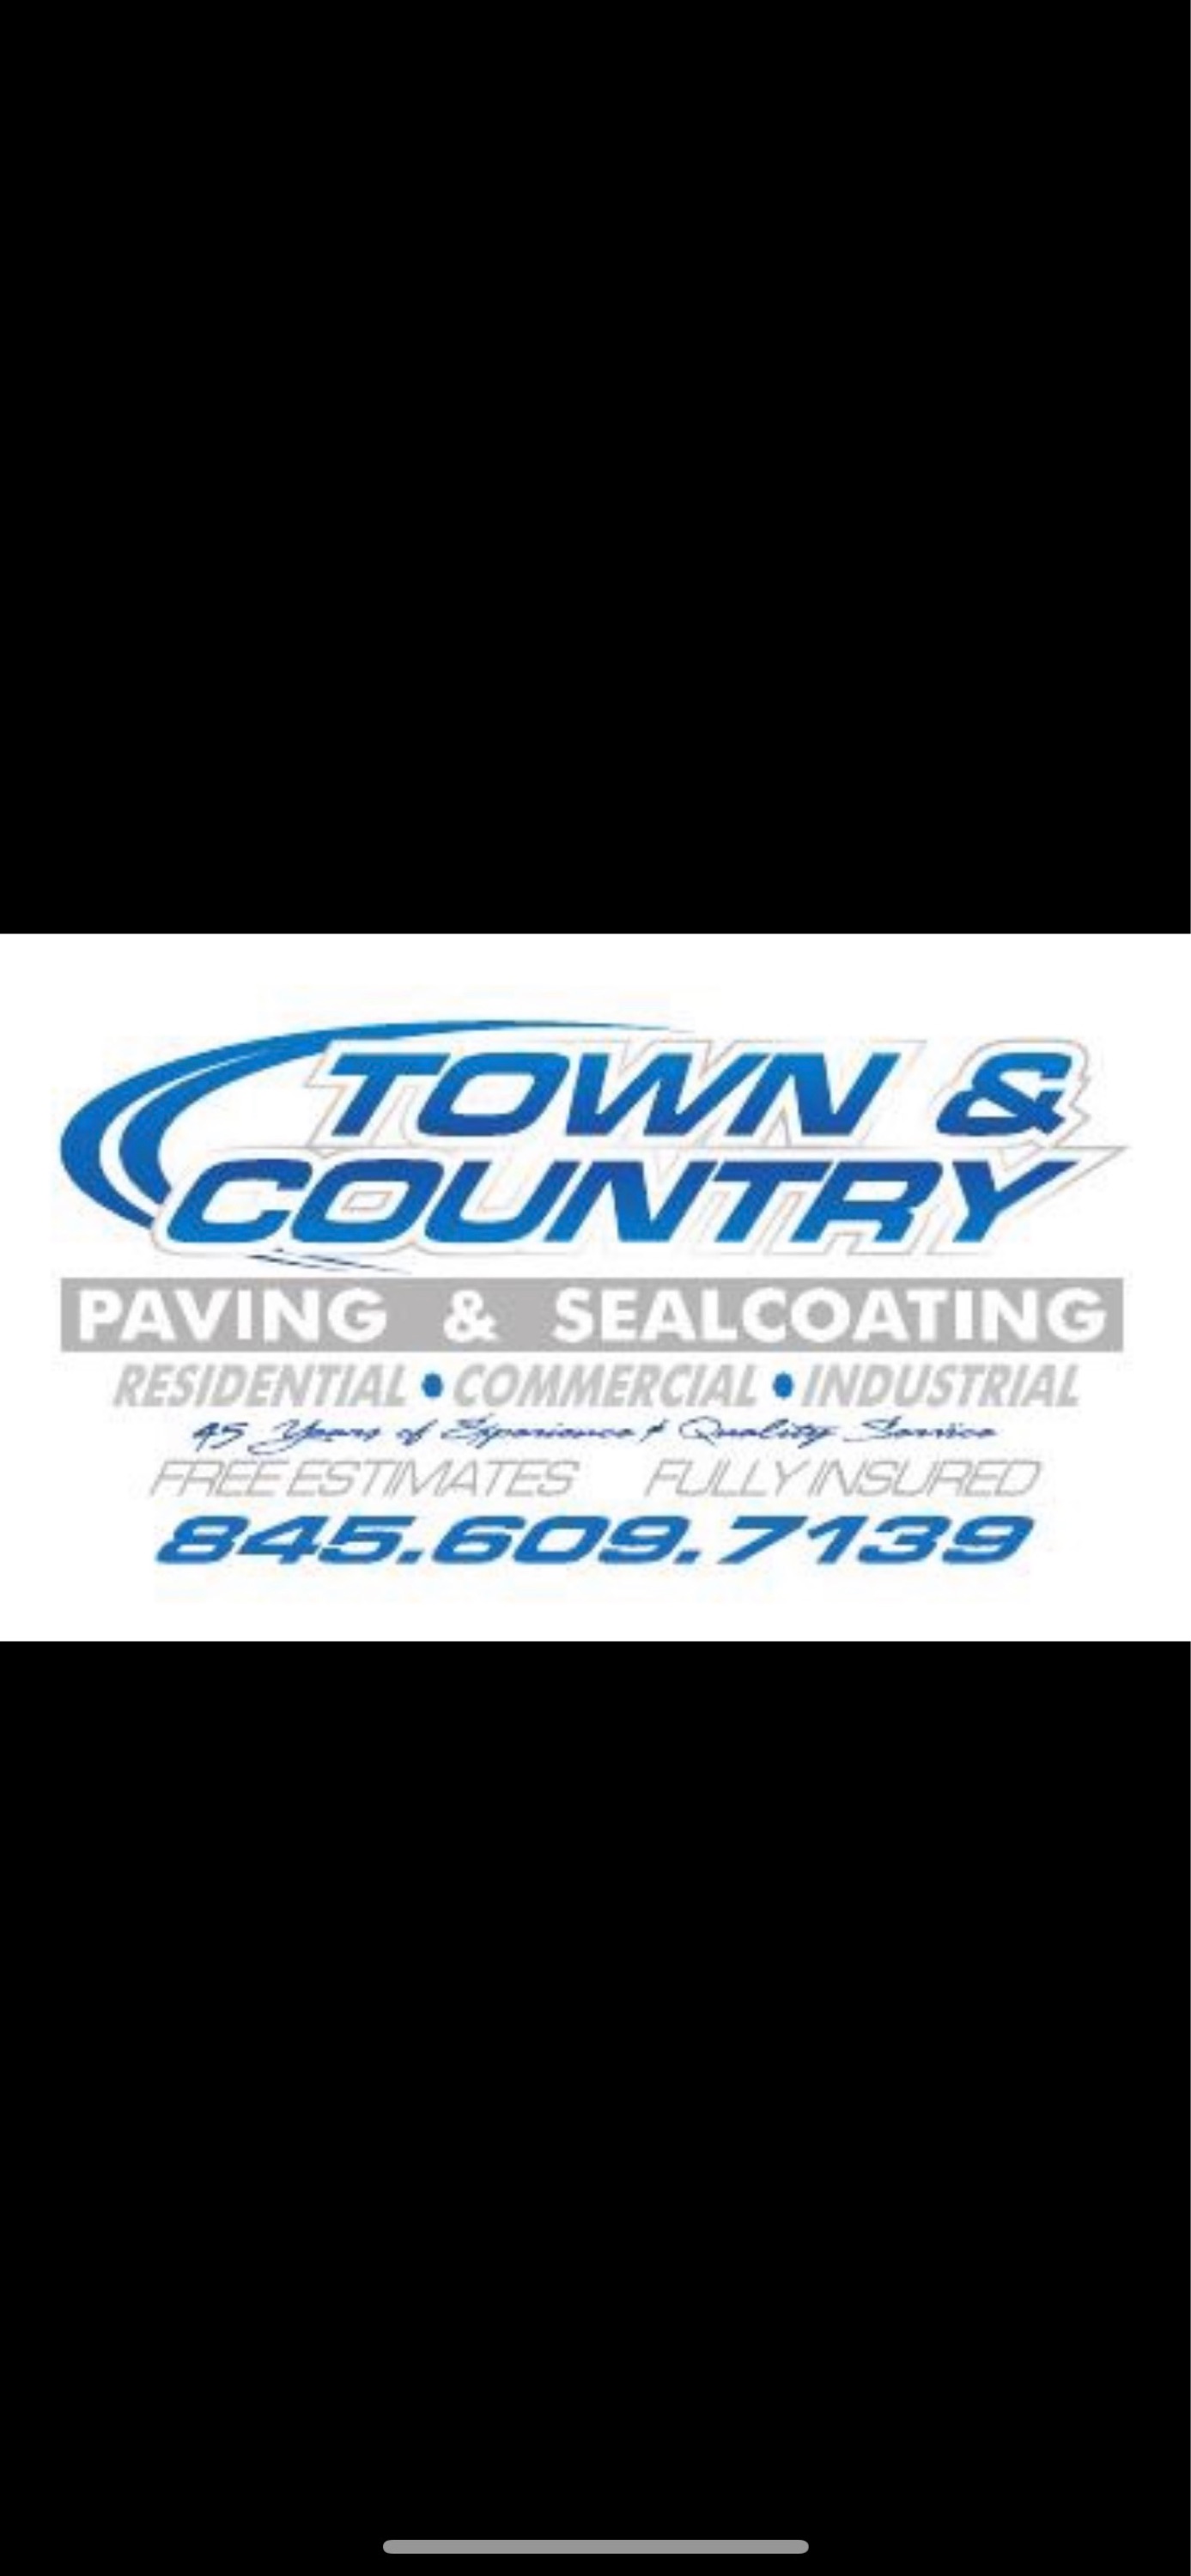 Town & Country Paving & Sealcoating, LLC Logo